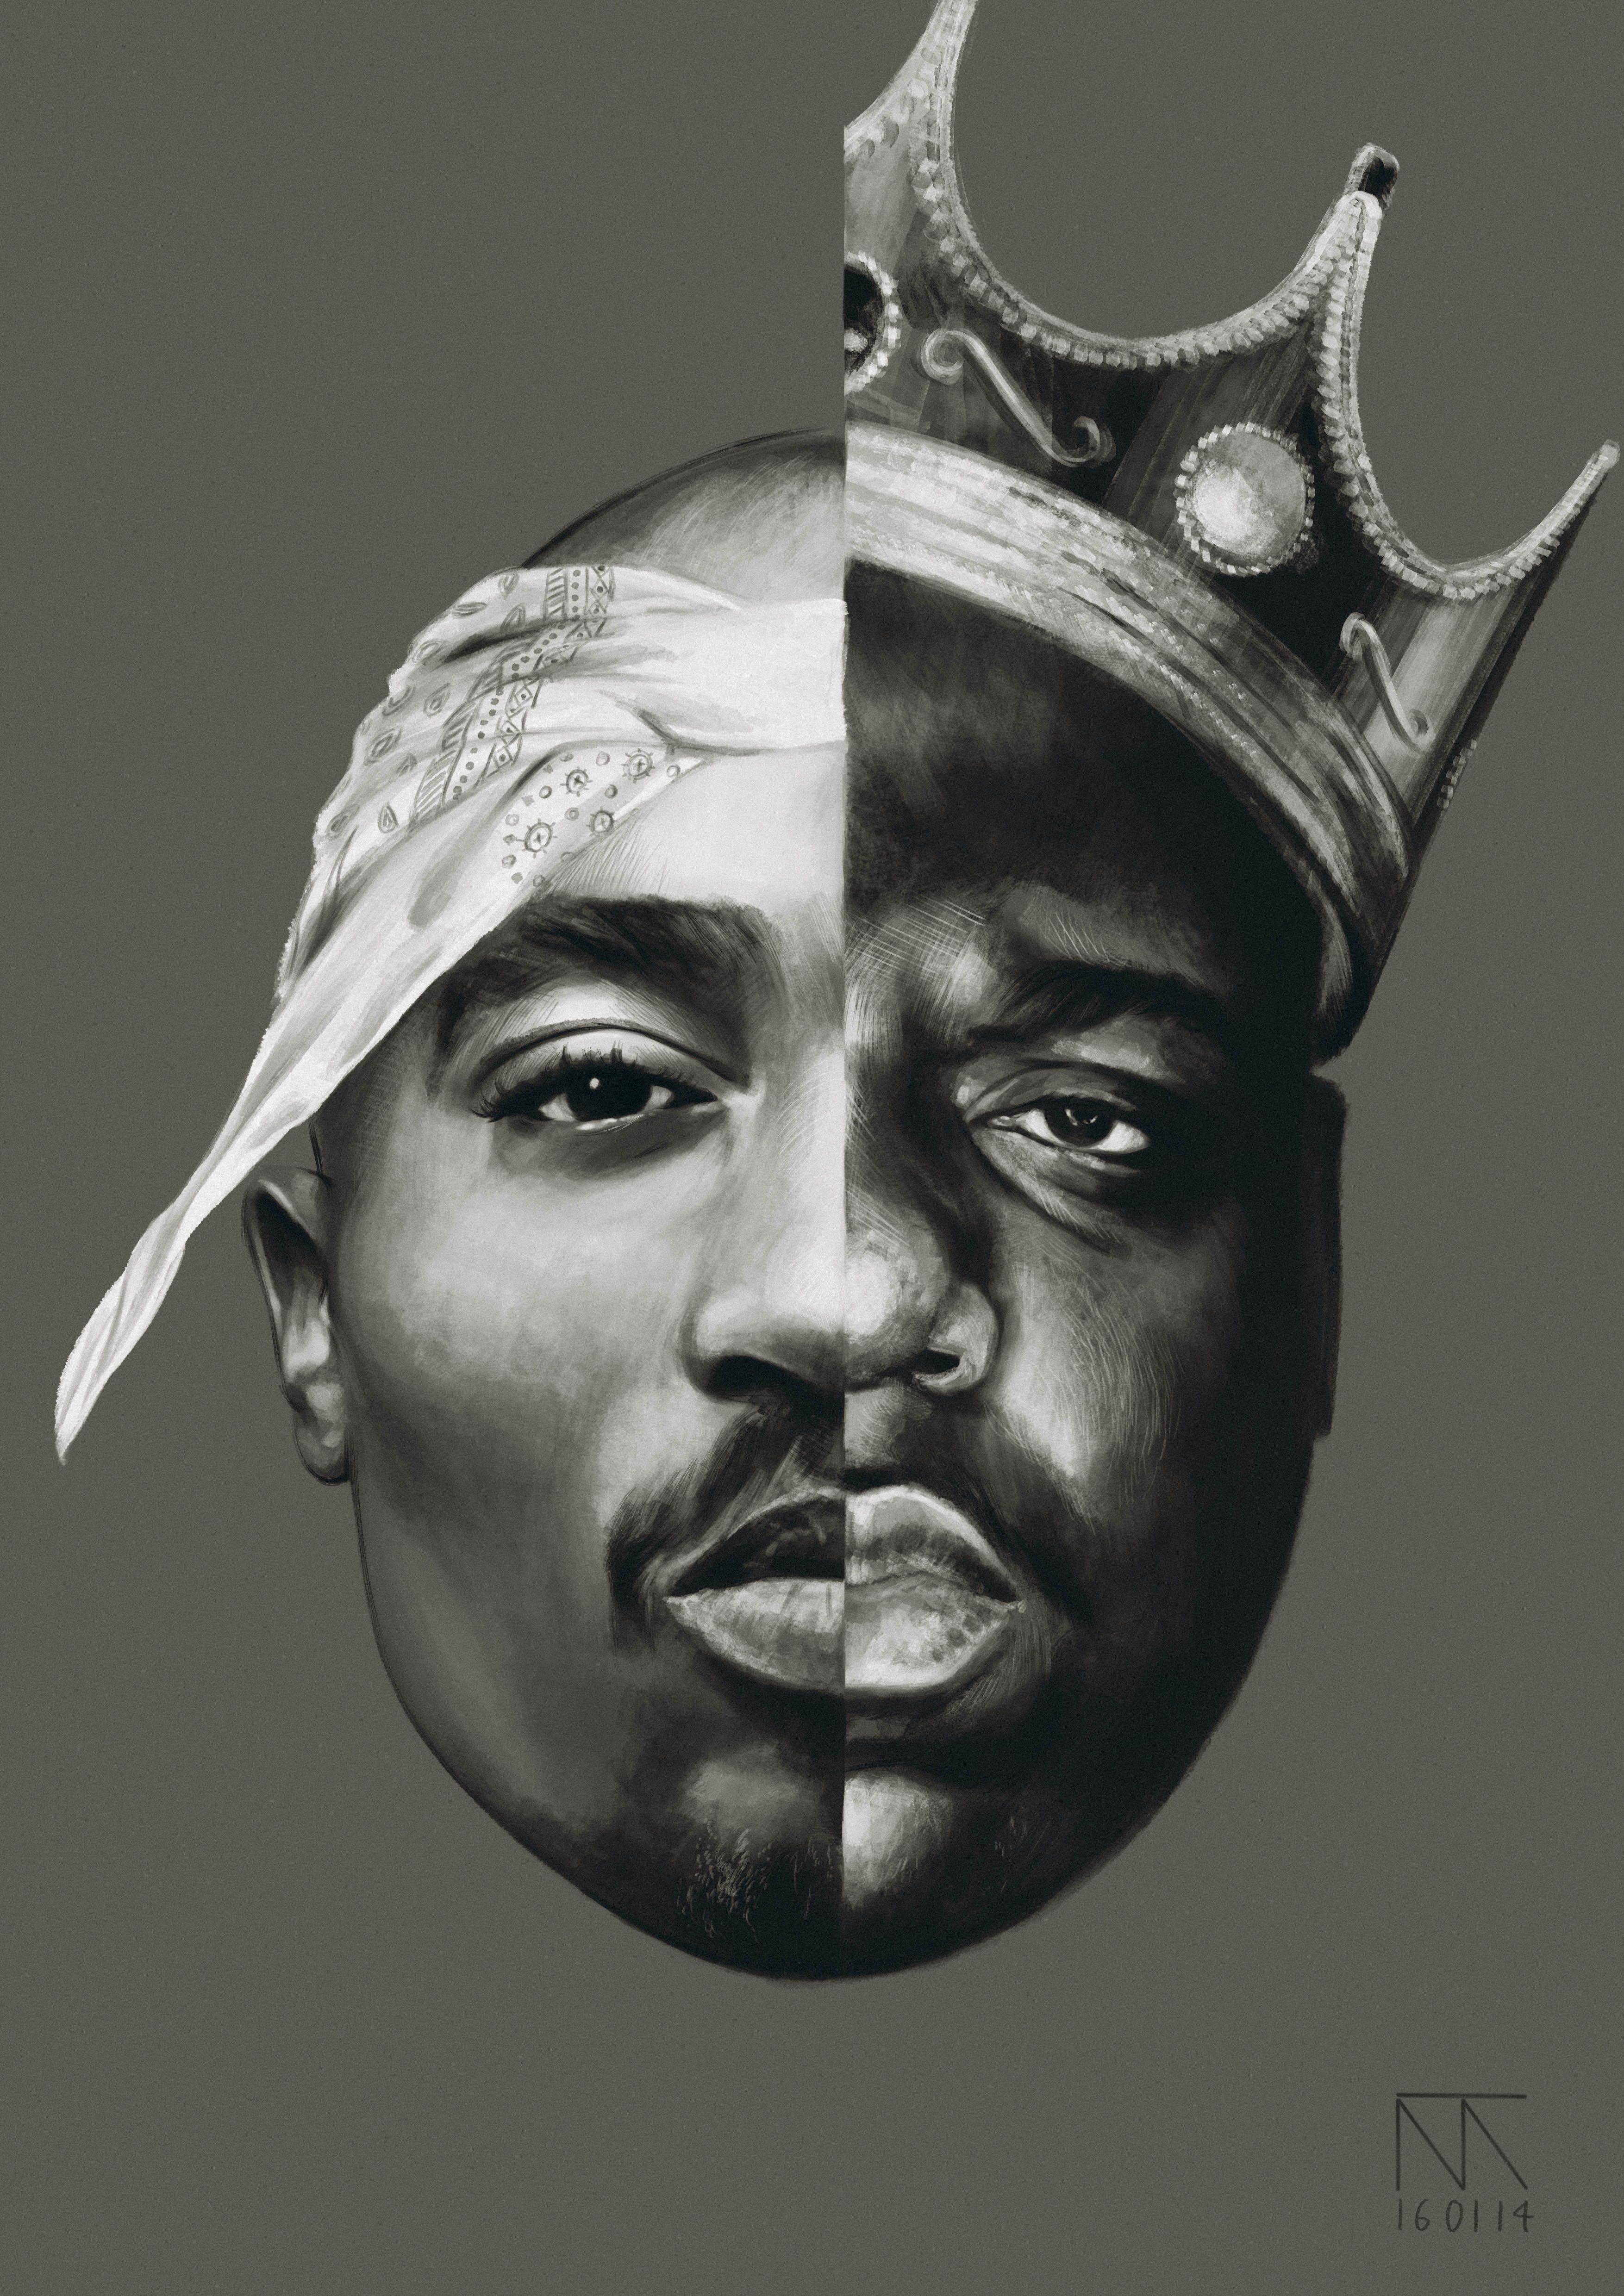 Cool Notorious B.I.G and Tupac Shakur Art. Stuff